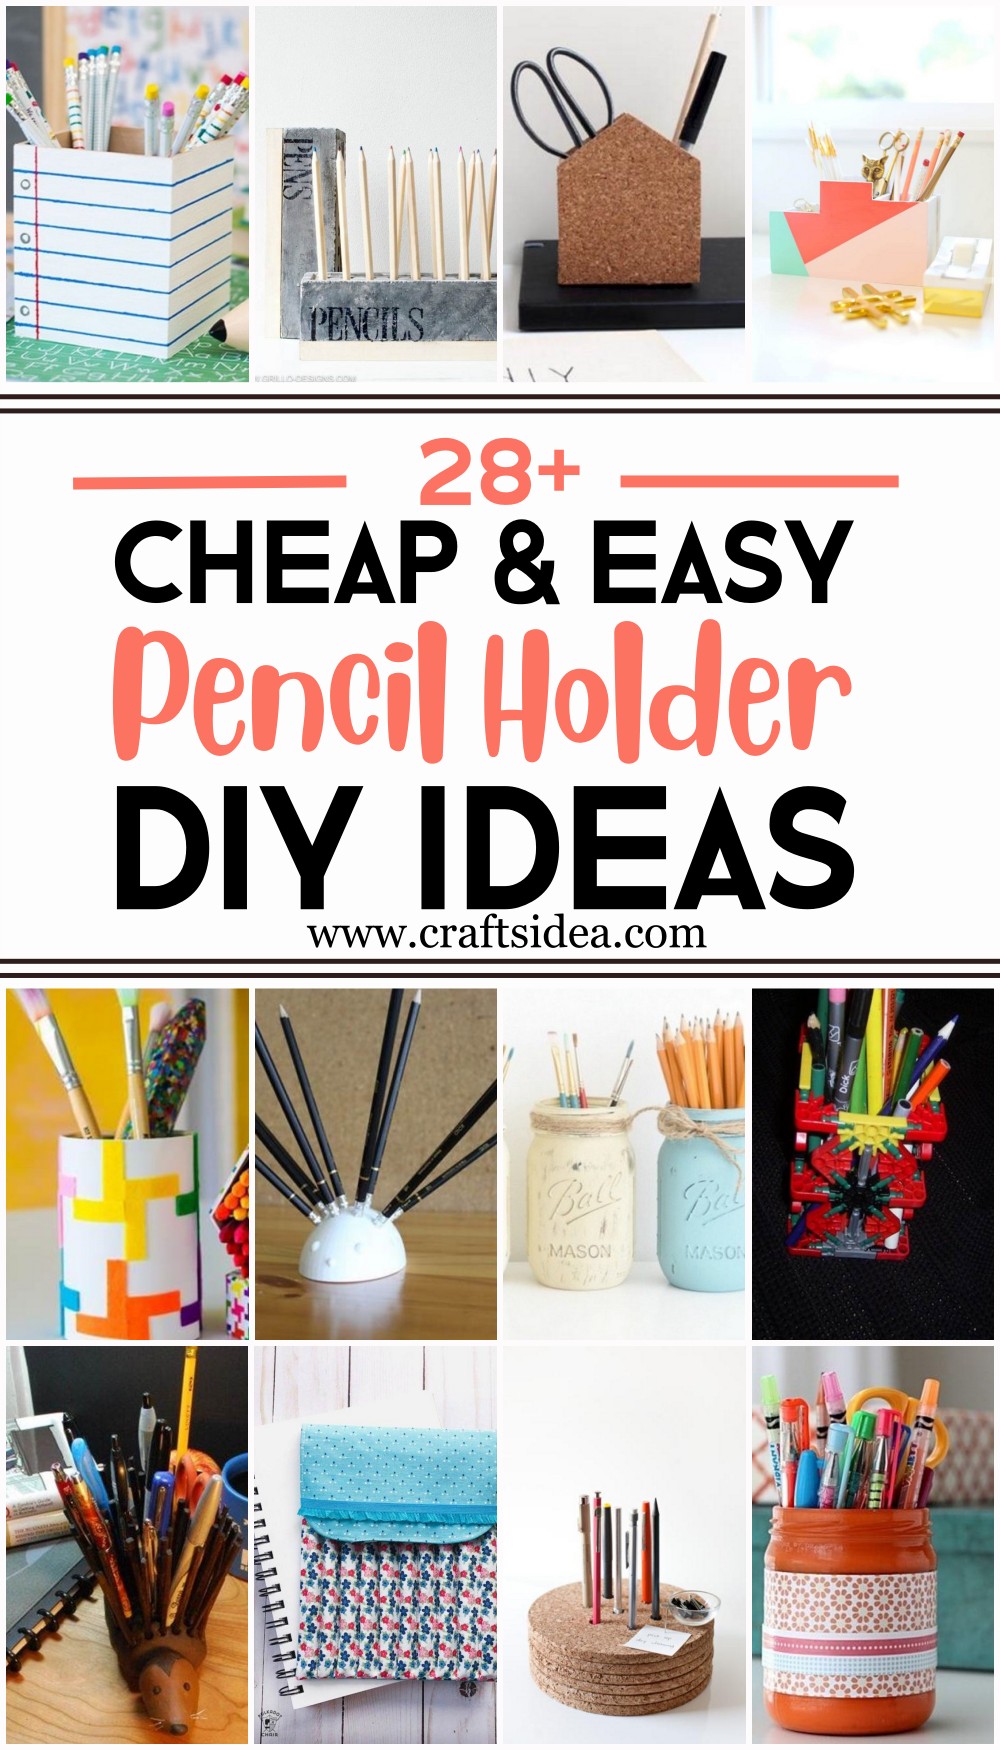 DIY Pencil Holder Ideas 1